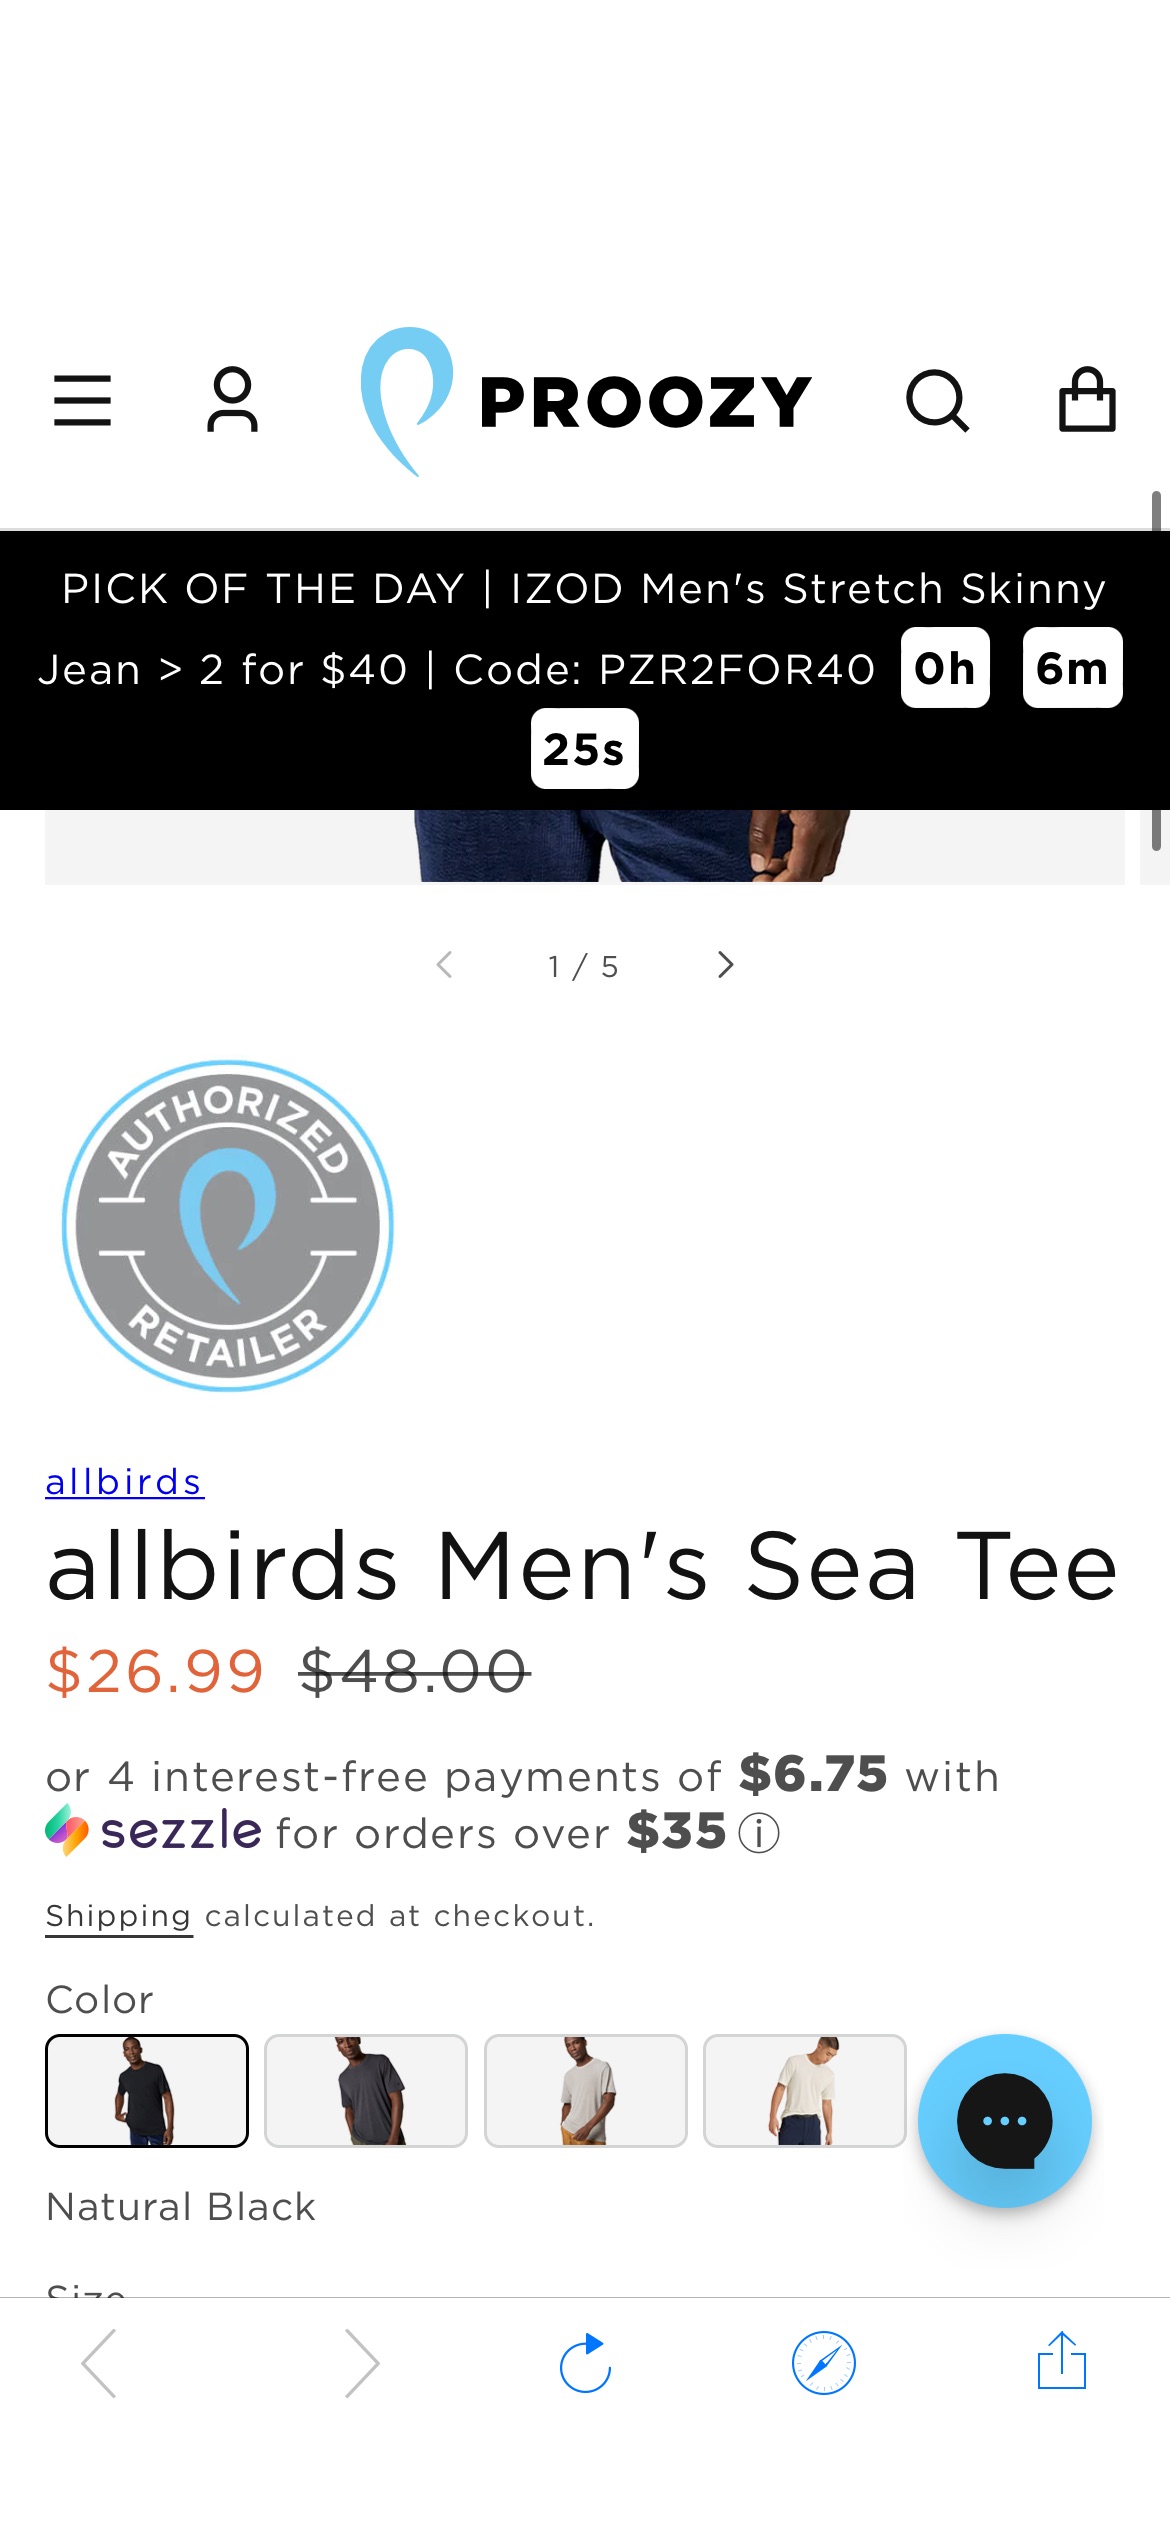 allbirds Men's Sea Tee – PROOZY Proozy：我们看到你在检查我们！

 马上购买 allbirds 男式 Sea T 恤（$26.99），您最喜欢的款式都有货！